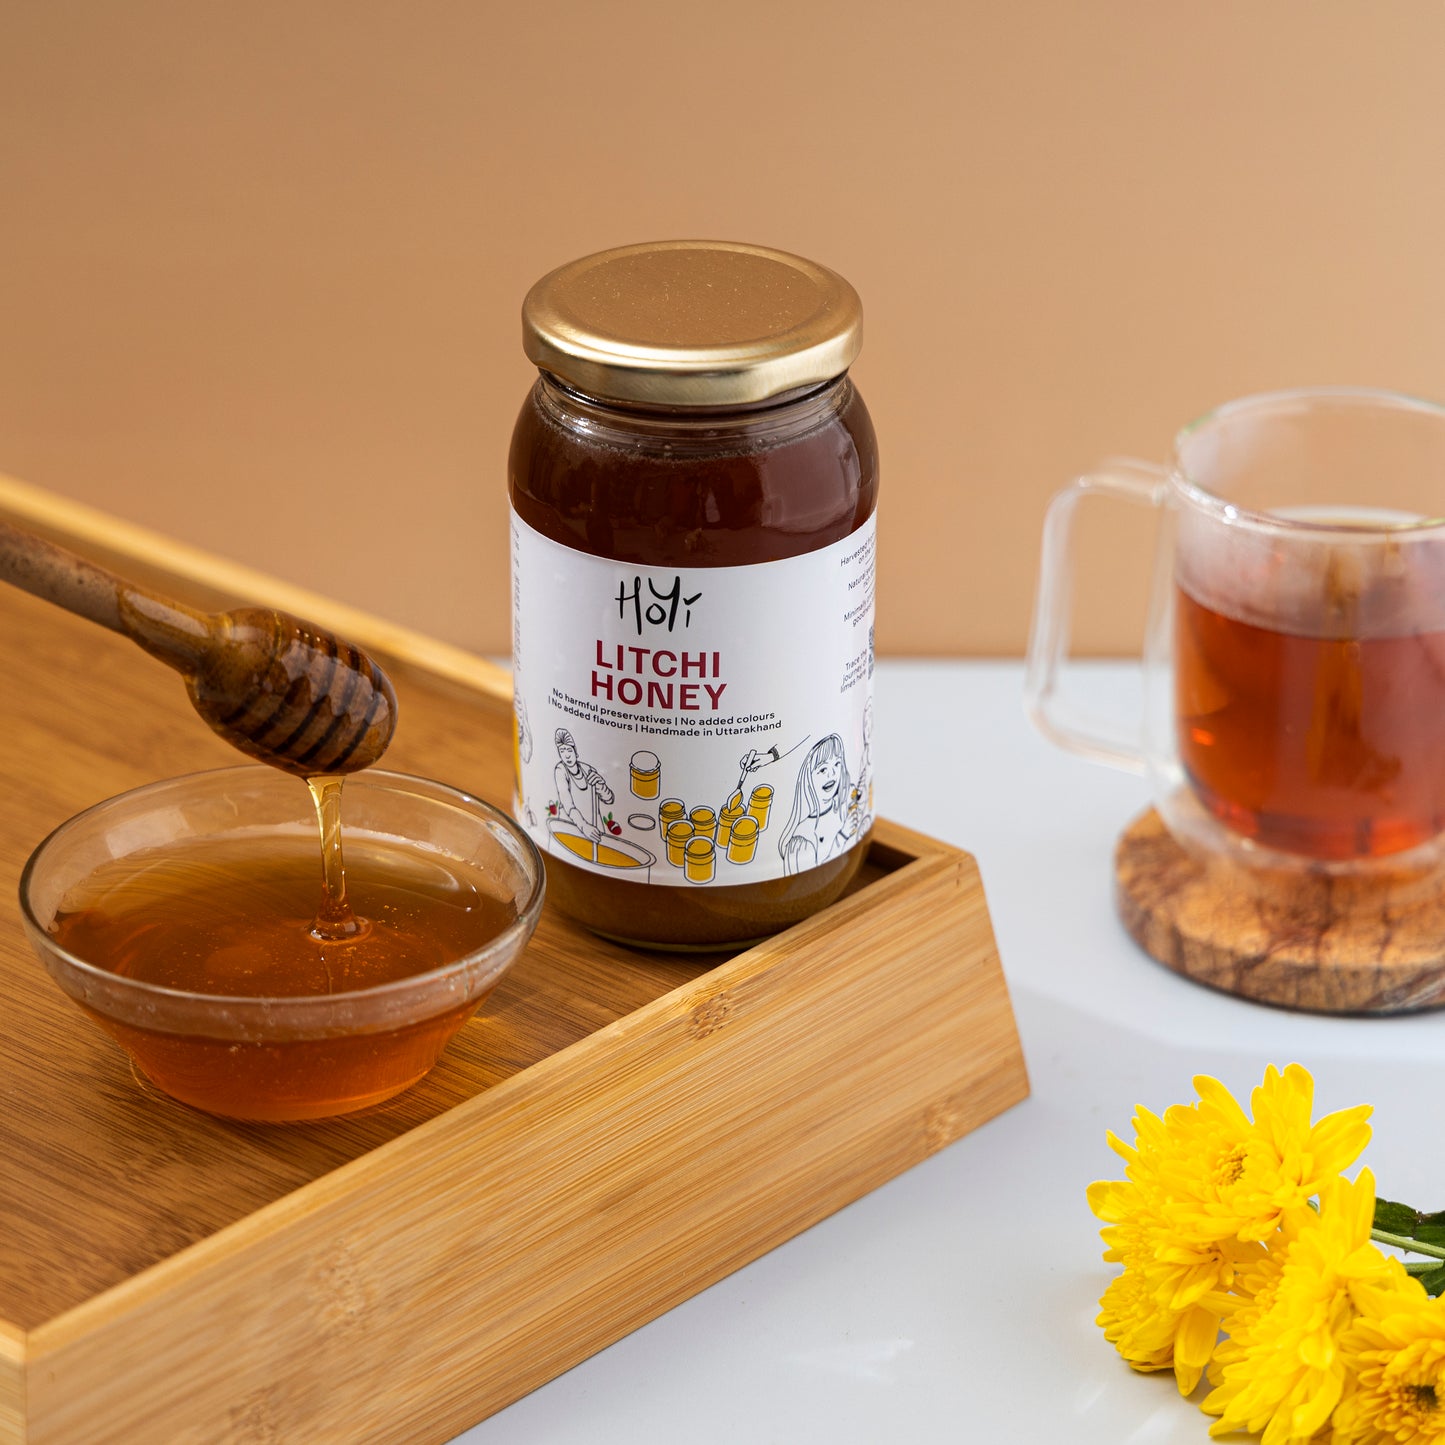 HoYi Litchi Honey 500 gm Handmade and Organic (Creative)